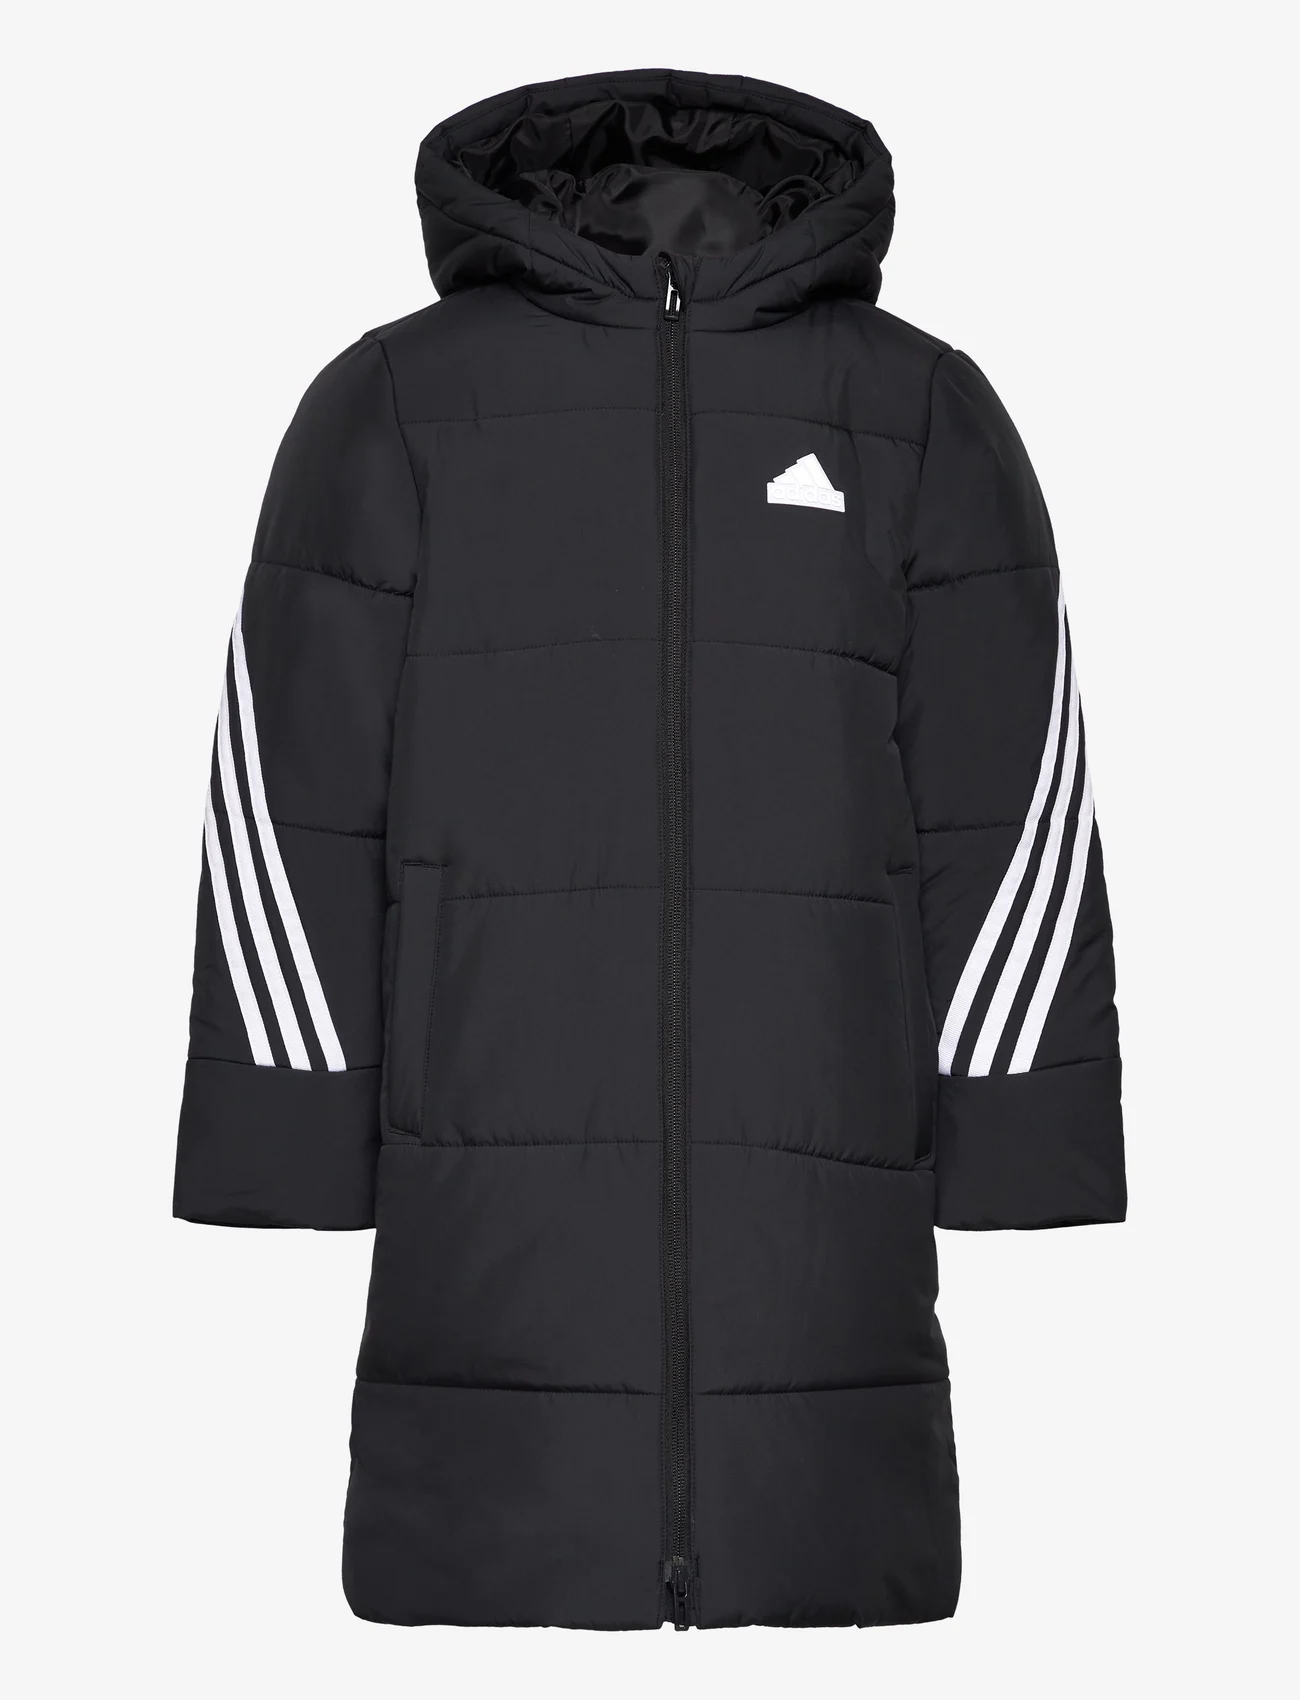 adidas Sportswear - 3-Stripes Padded Jacket - untuva- & toppatakit - black - 0